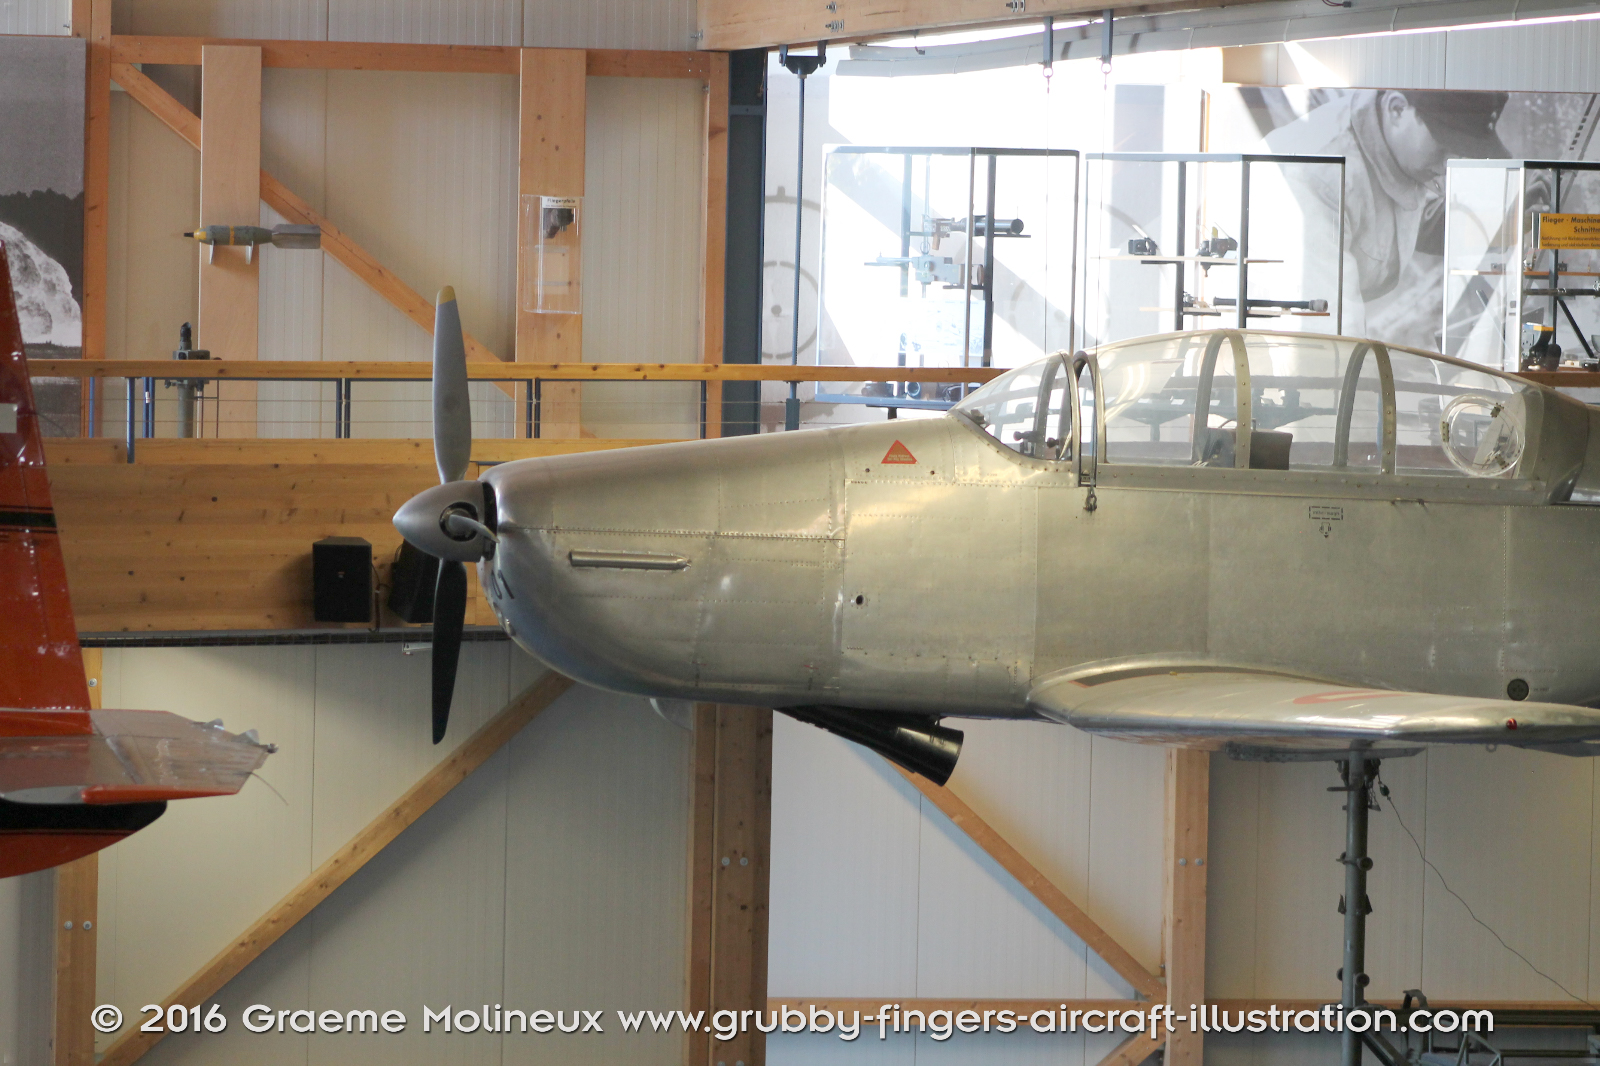 PILATUS_P-2_A-801_Swiss_Air_Force_Museum_2015_03_GrubbyFingers